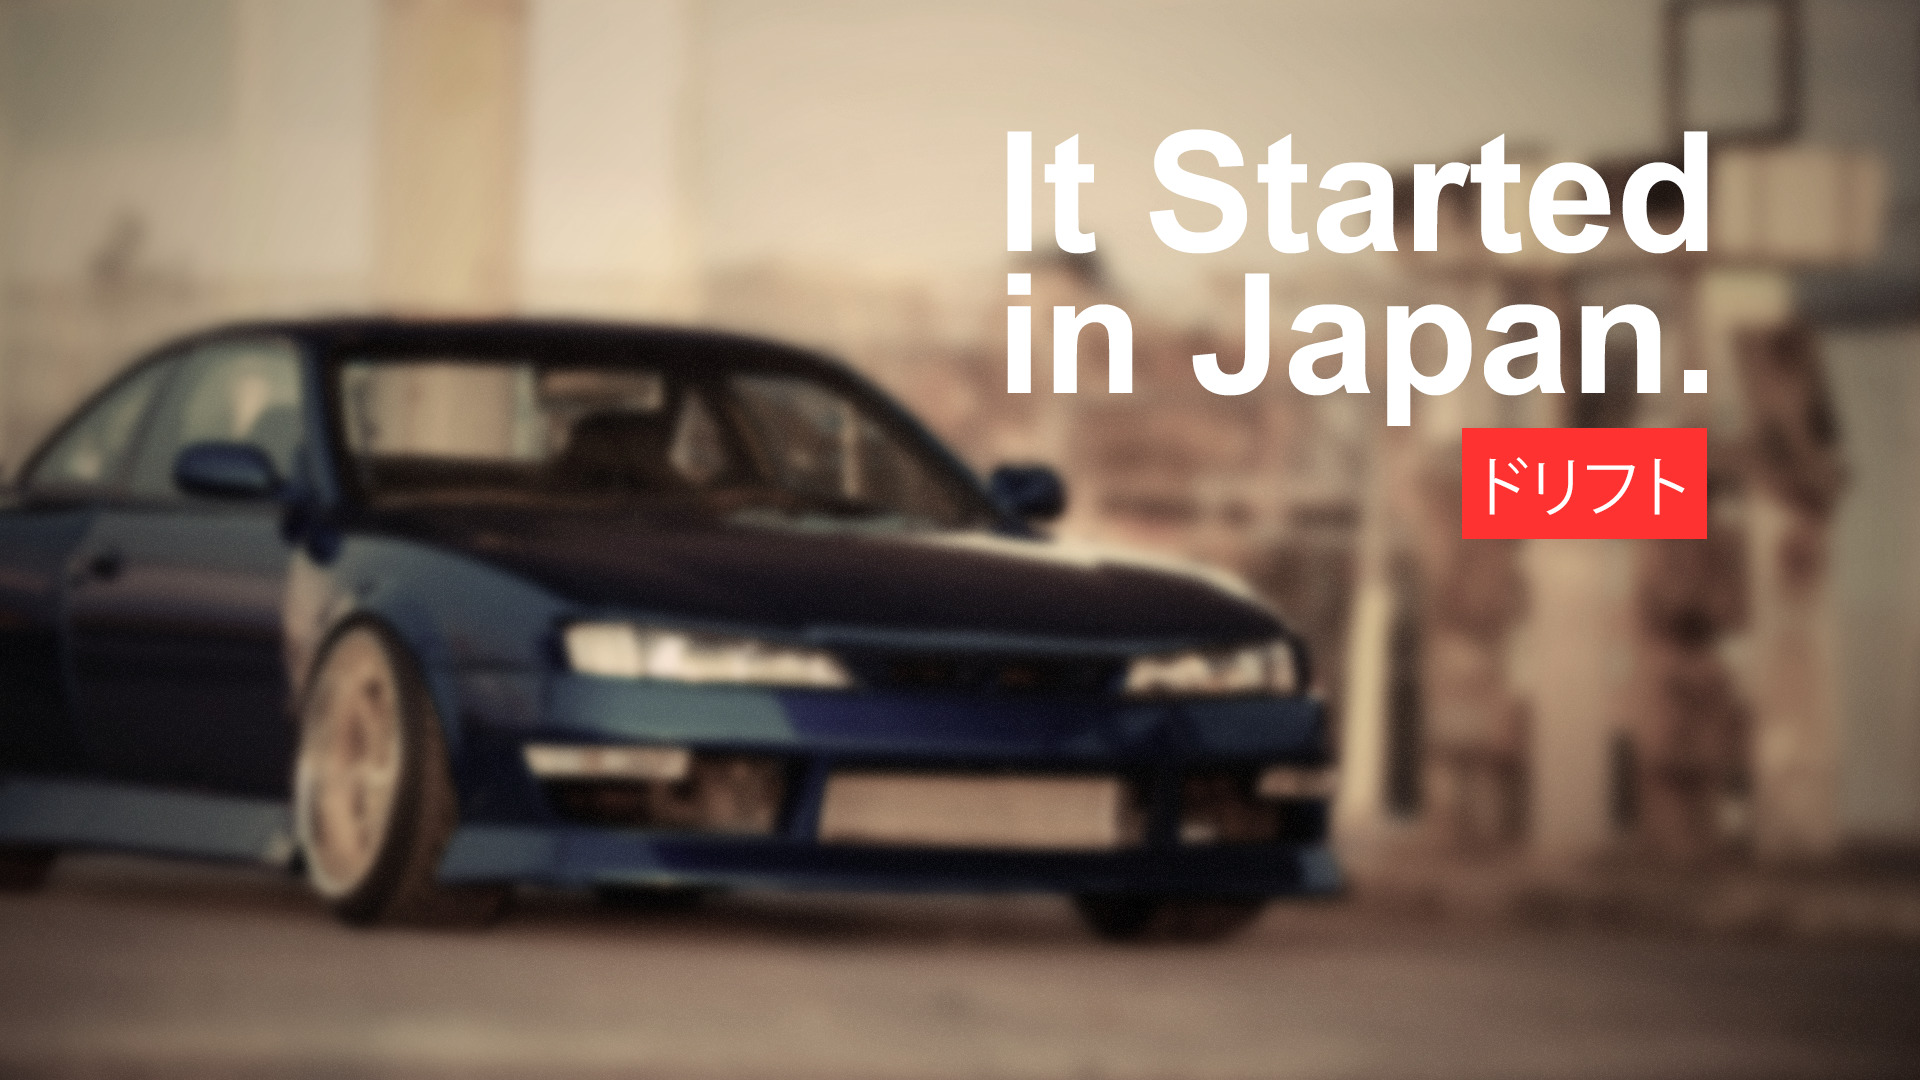 car, Japan, Drift, Drifting, Racing, Vehicle, Japanese Cars, Import, Tuning, Modified, Nissan, Silvia, Silvia S14, It Started In Japan Wallpaper